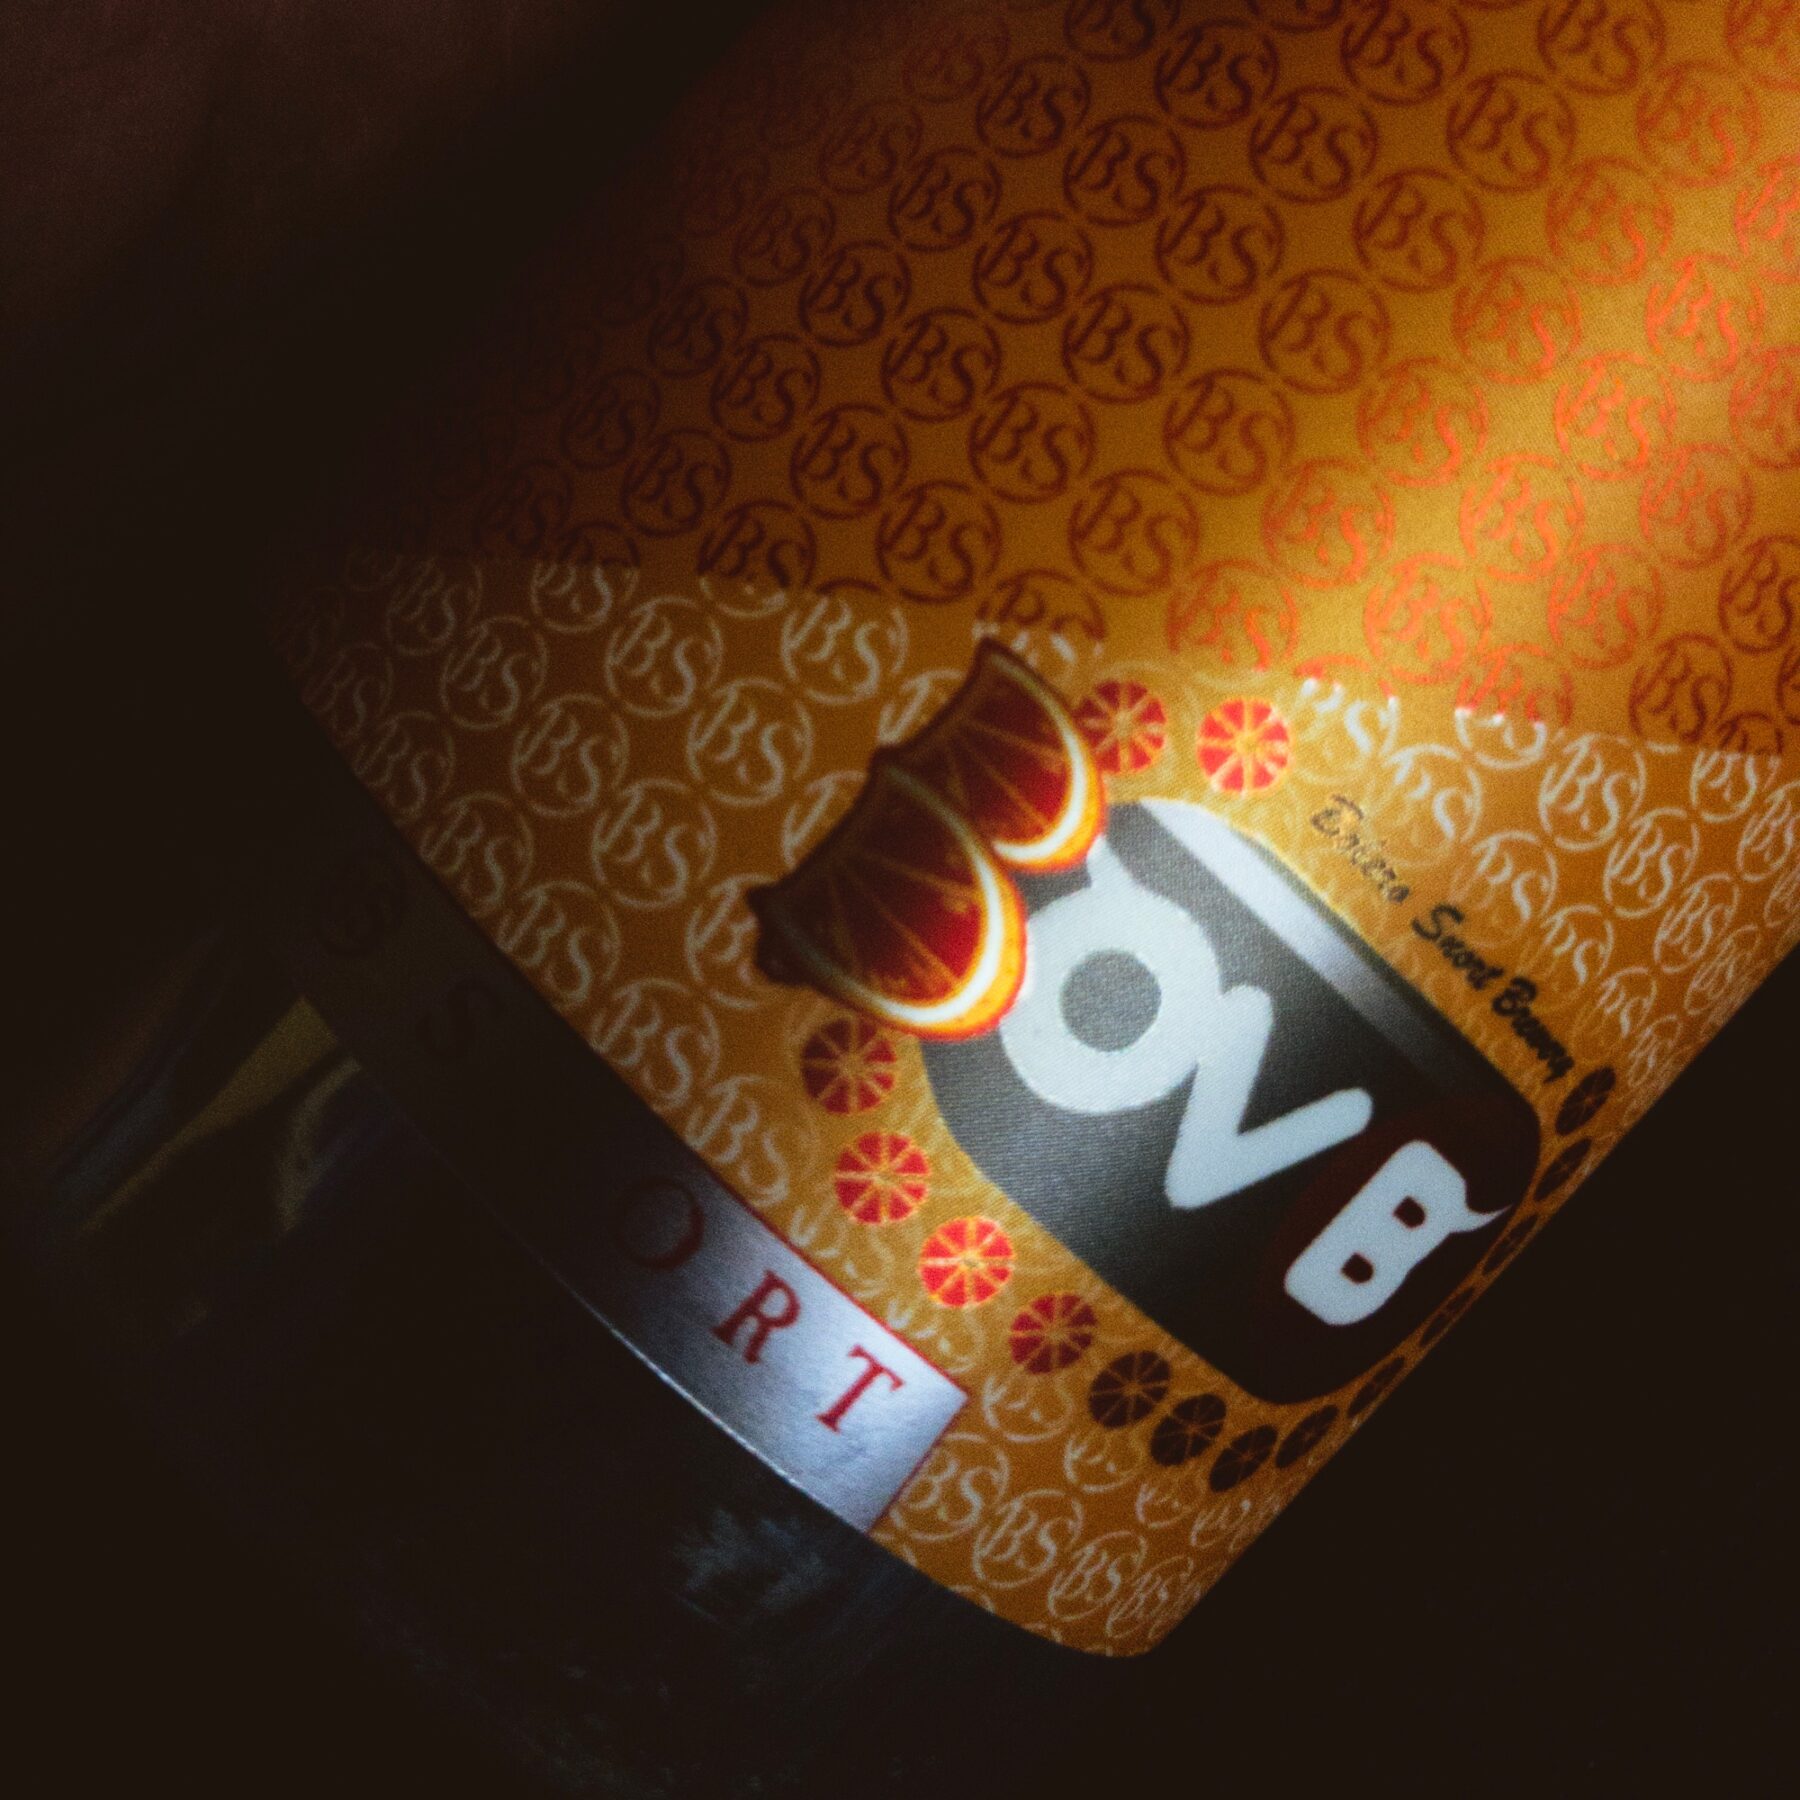 Bolero Snort Brewery's BOVB (Blood Orange Cream Pop IPA)